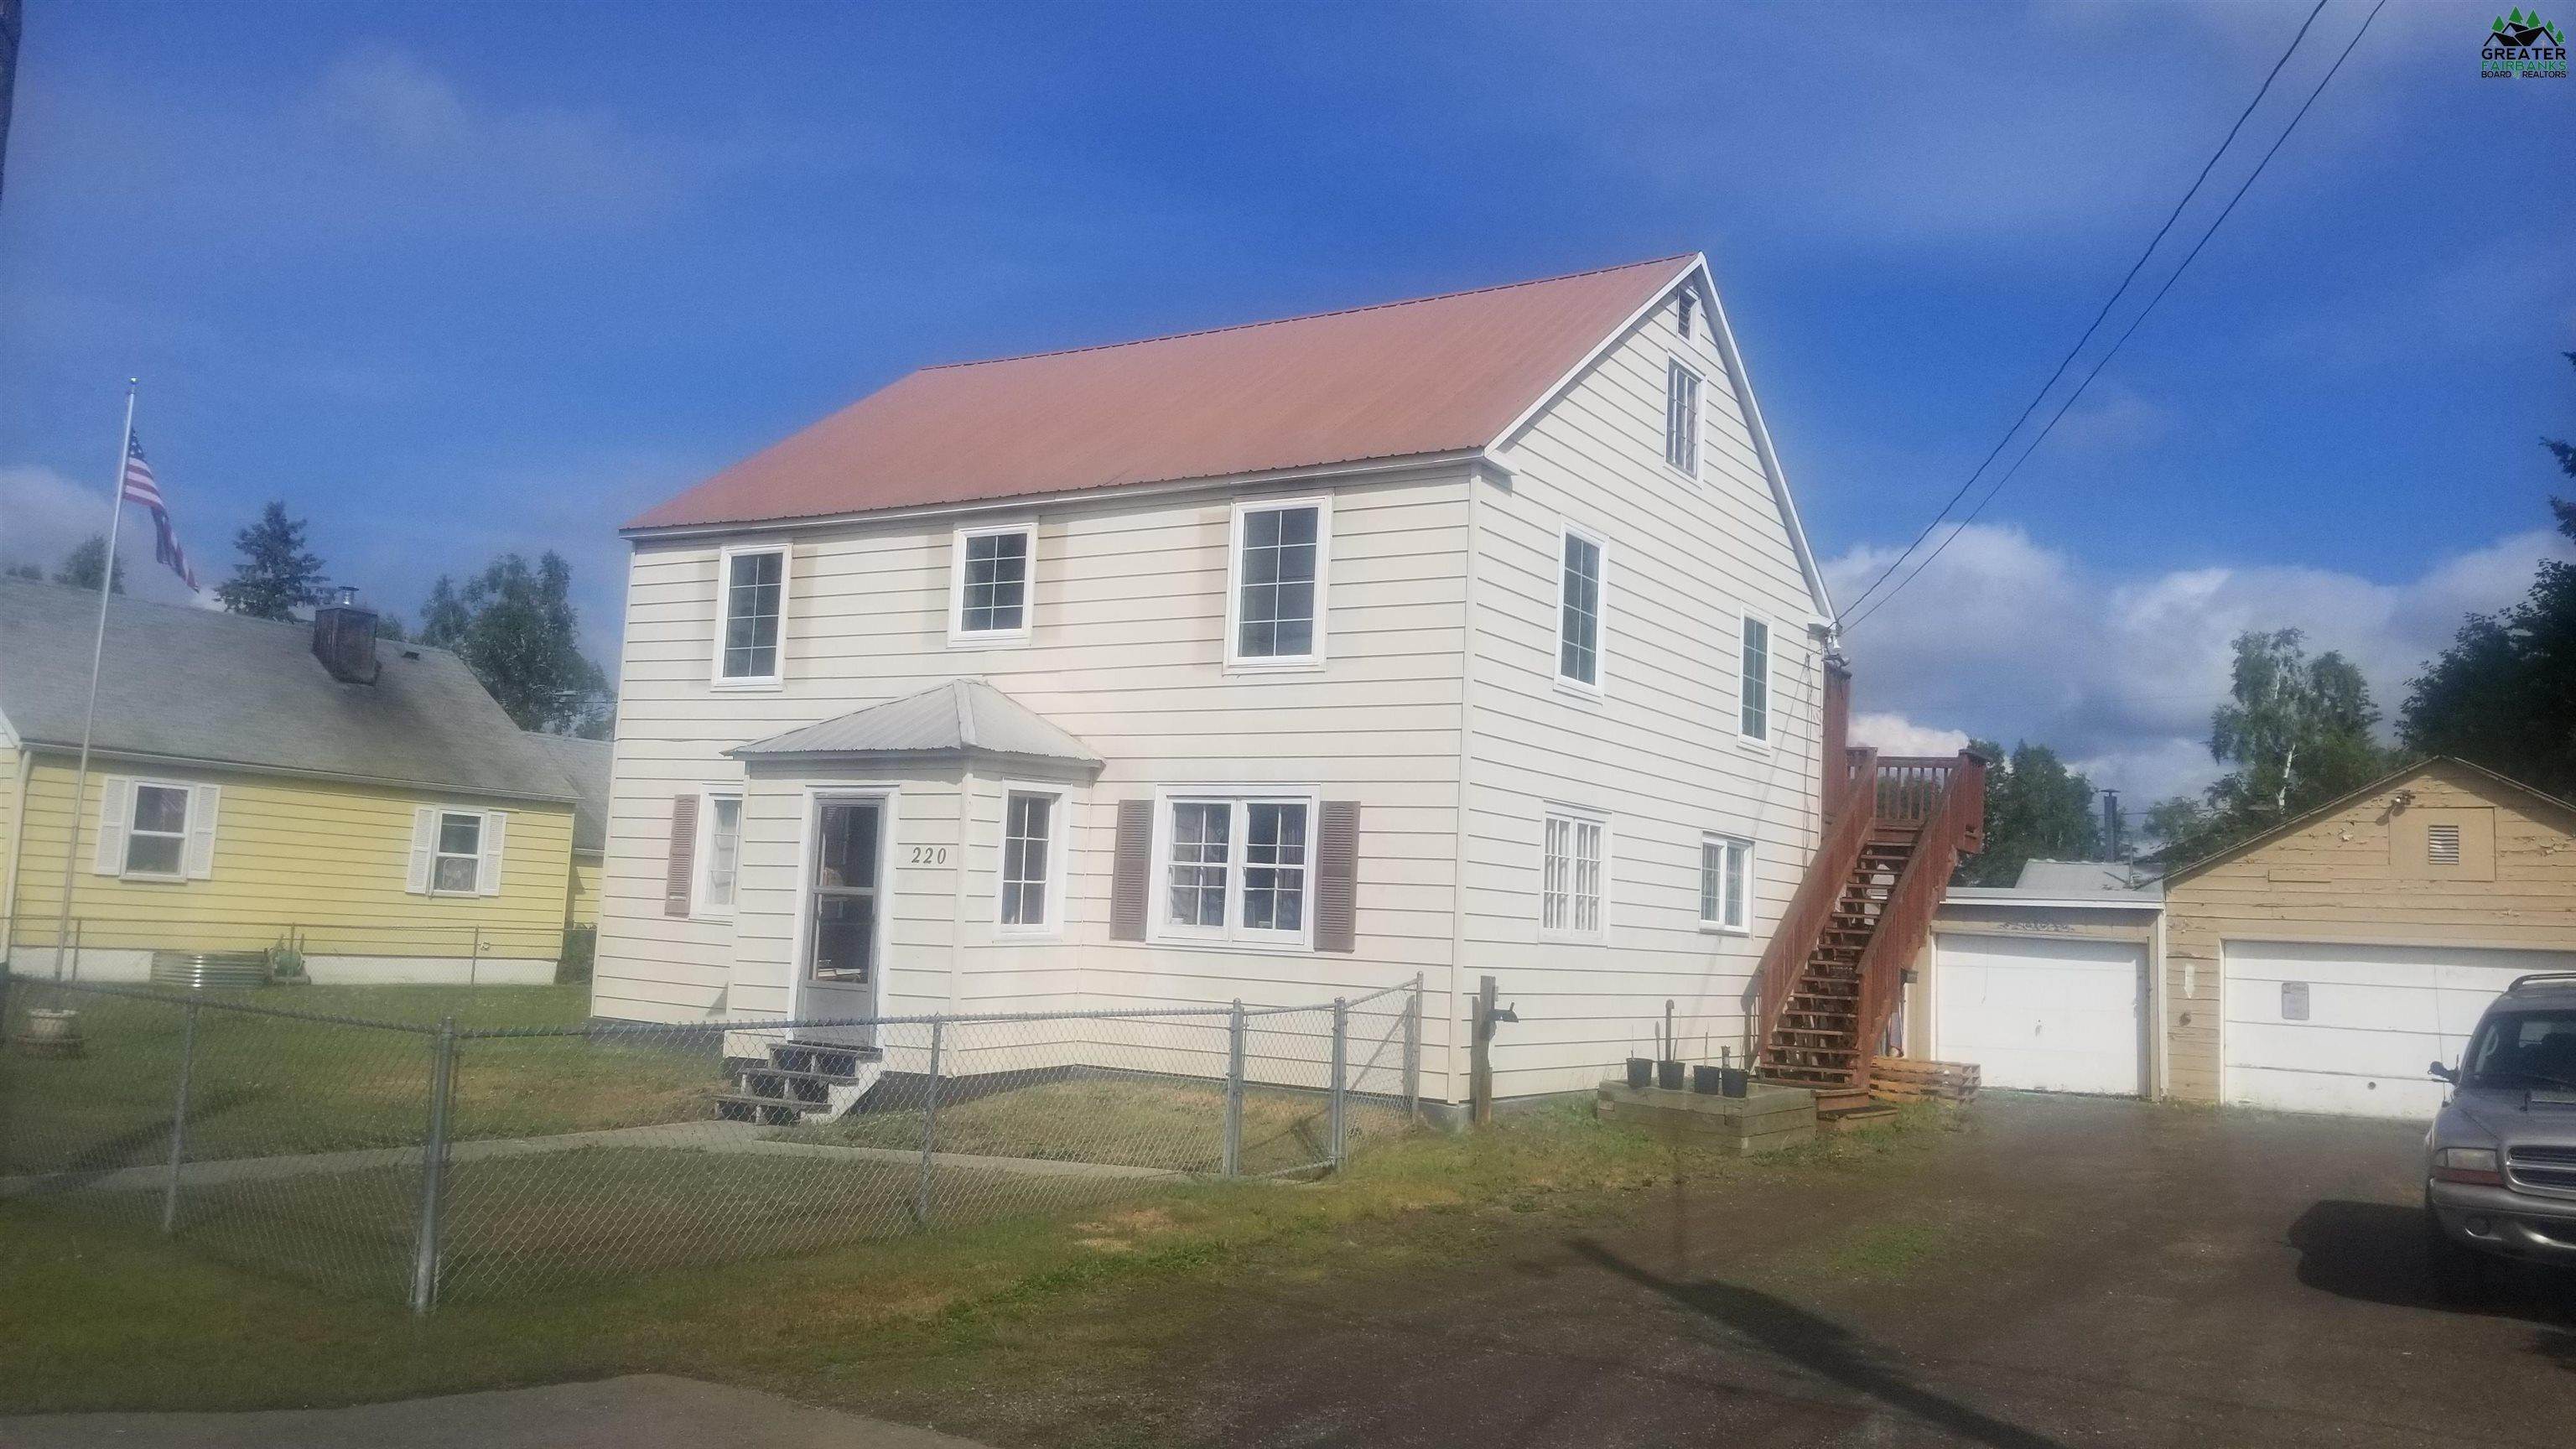 Duplex Homes for Sale at 220 CHARLES STREET Fairbanks, Alaska 99701 United States